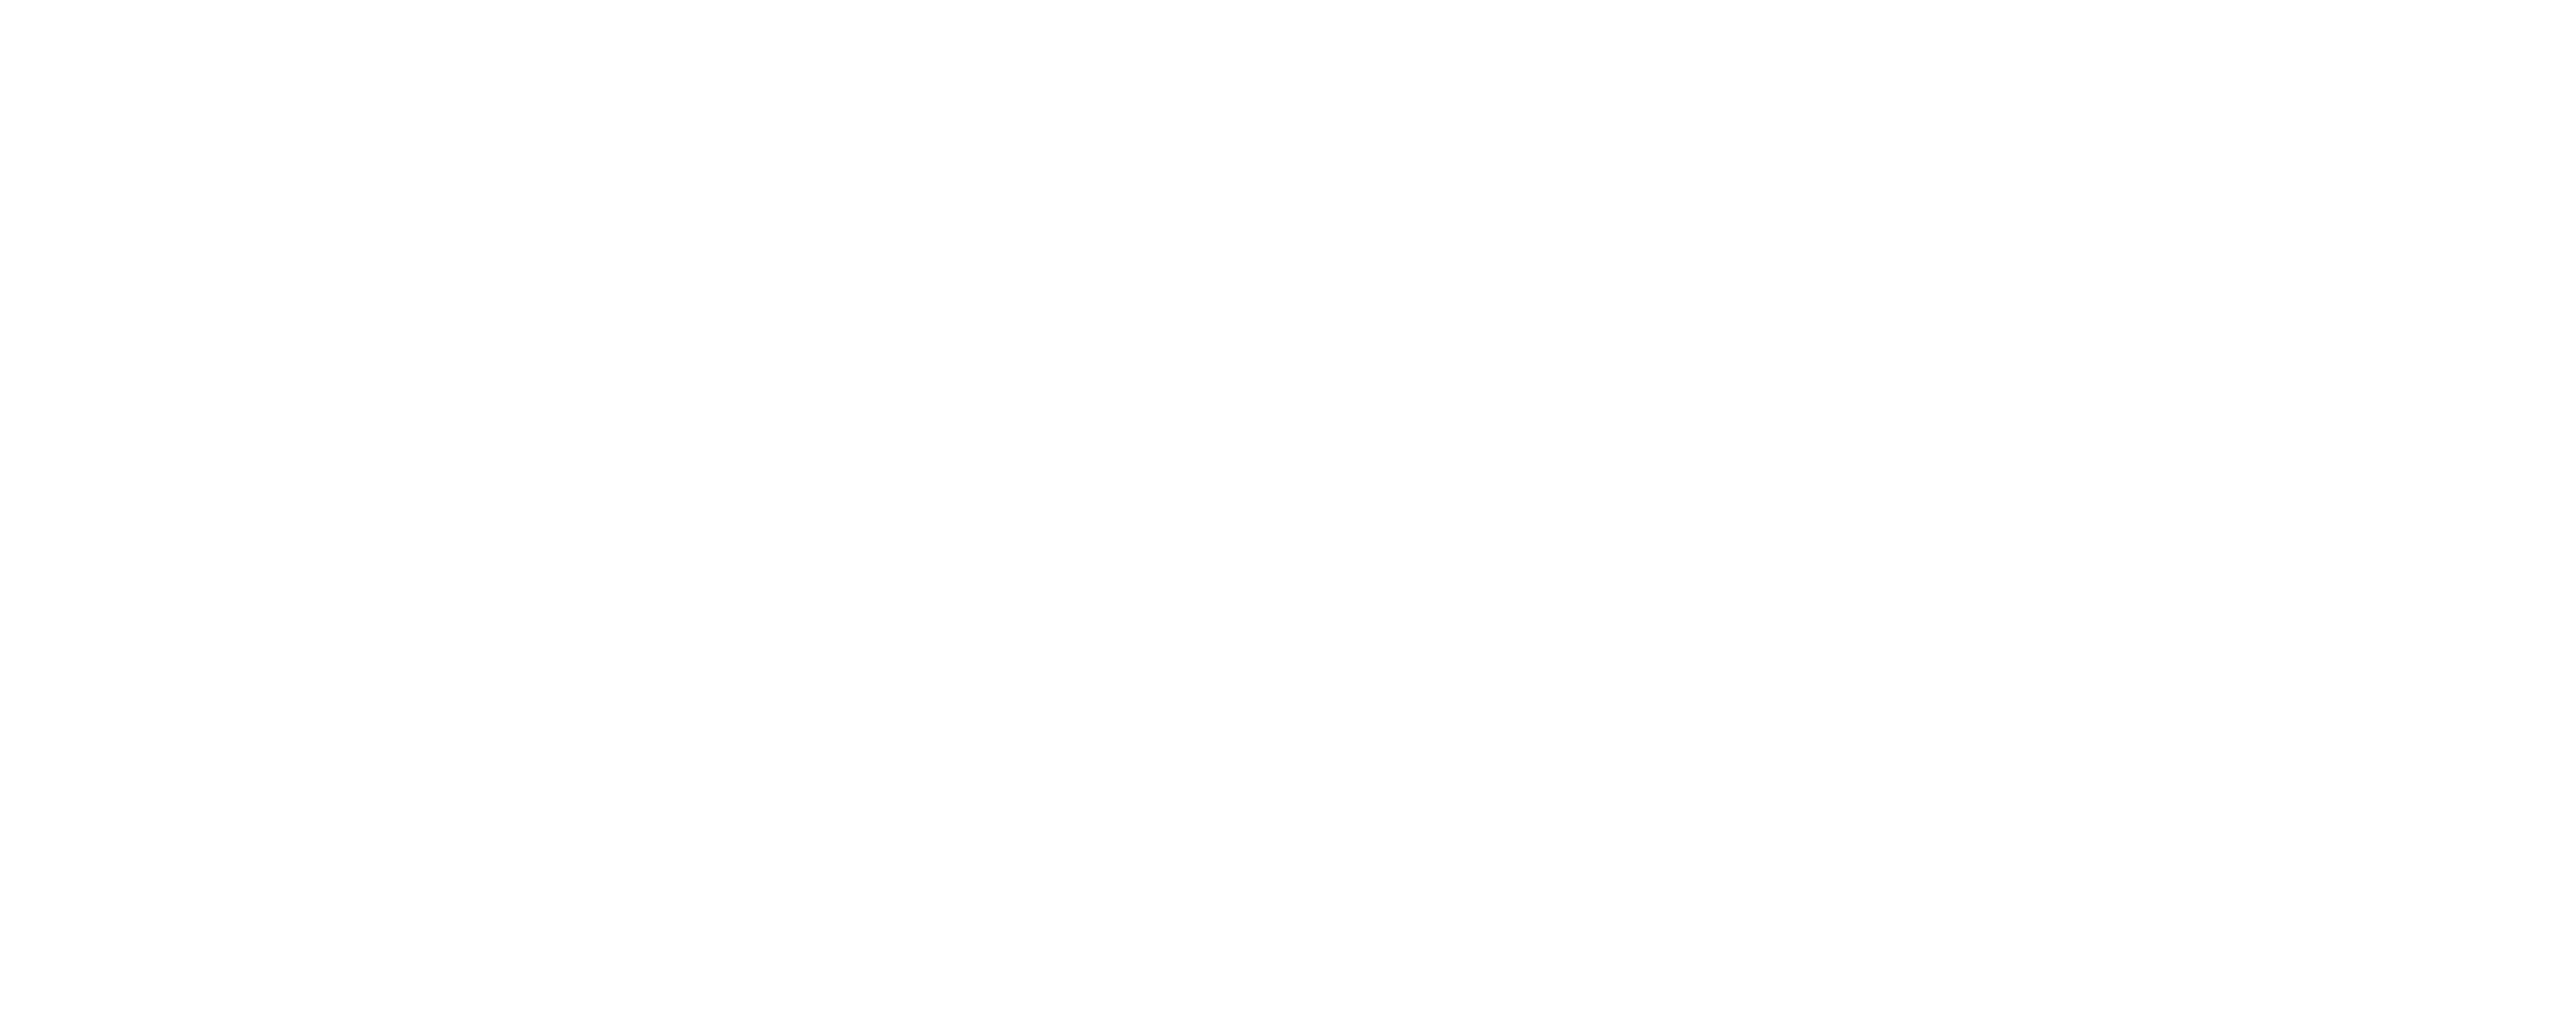 DNDi Logo